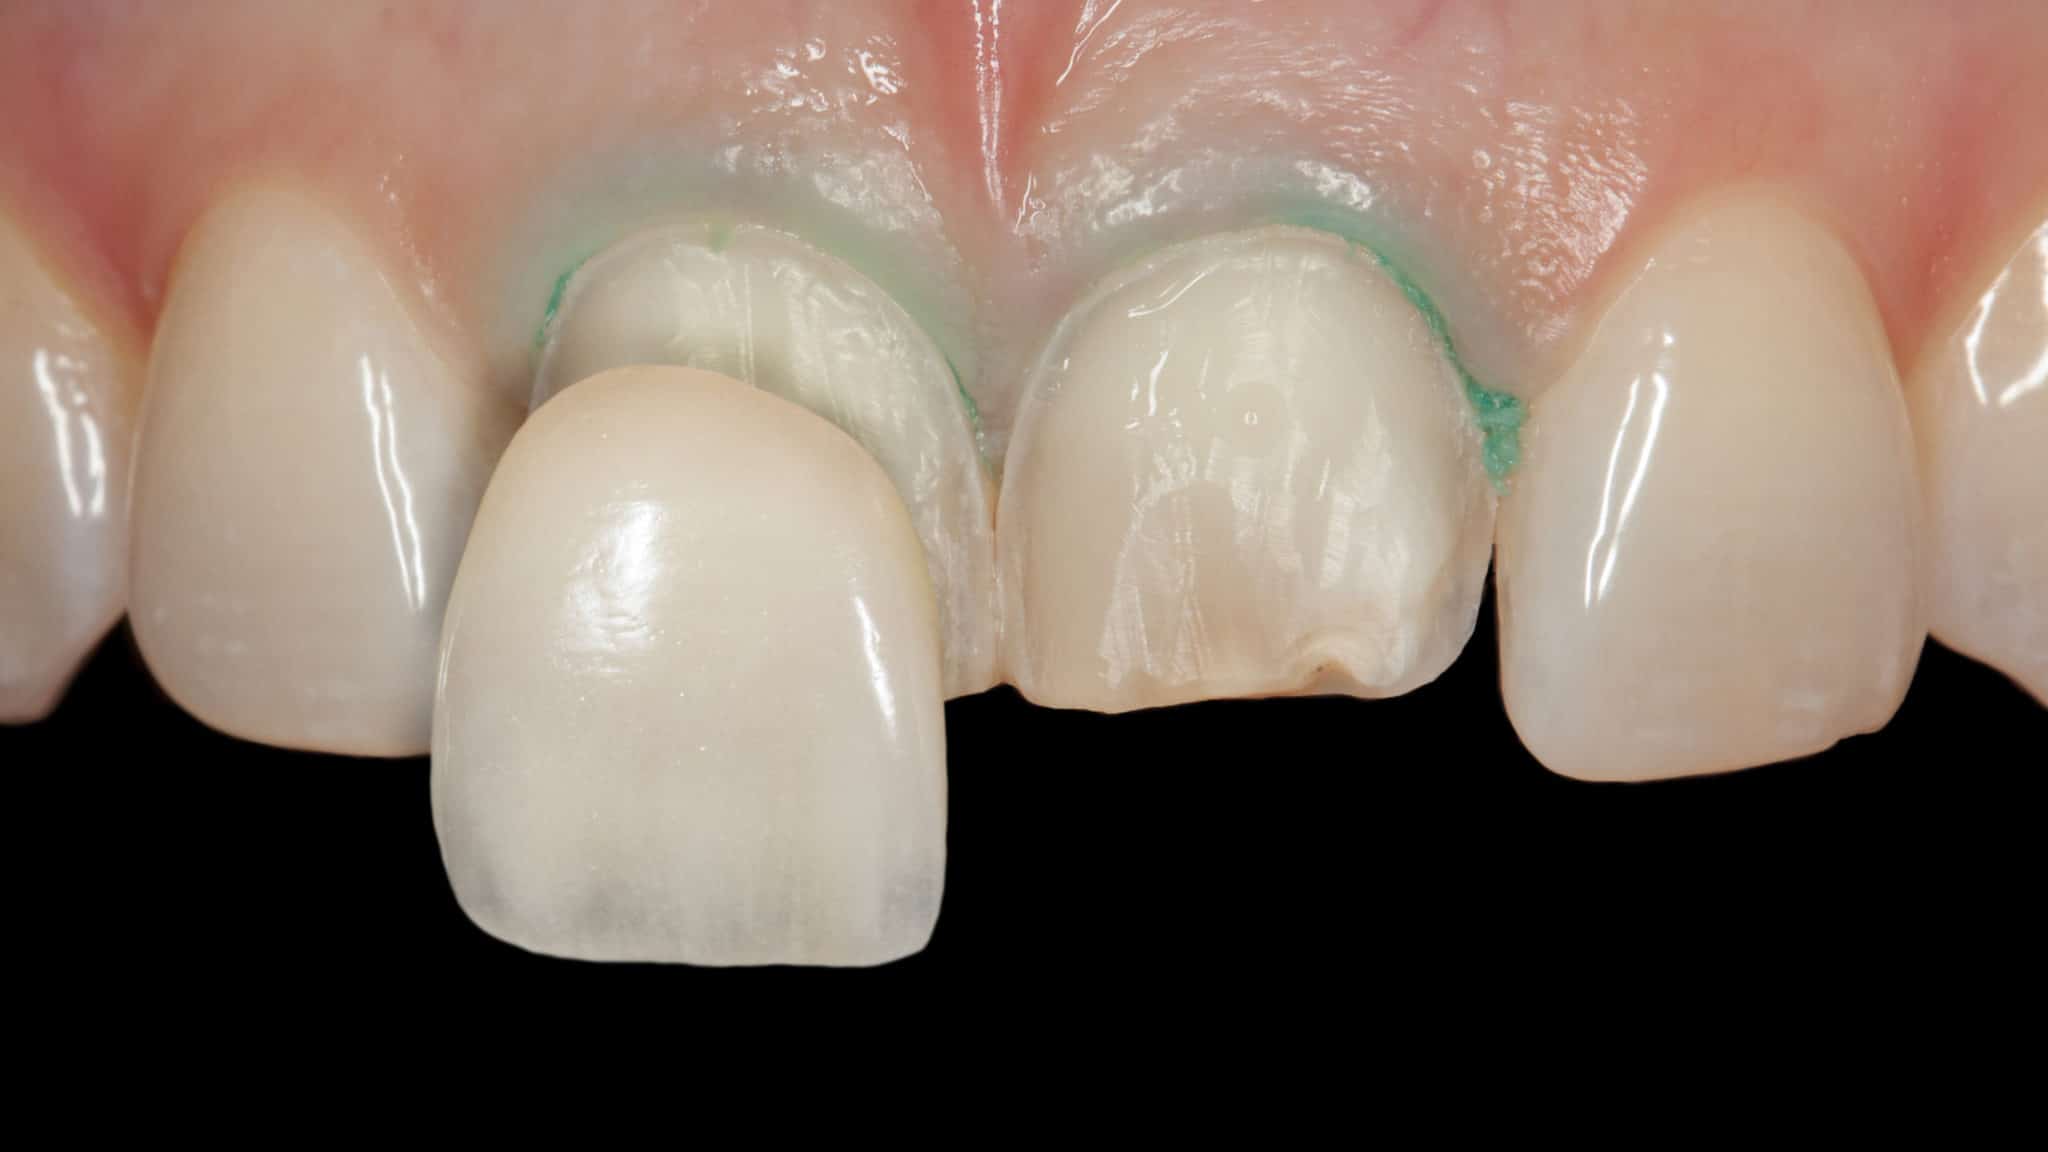 veneers can straighten teeth and also help improve tmj disorder